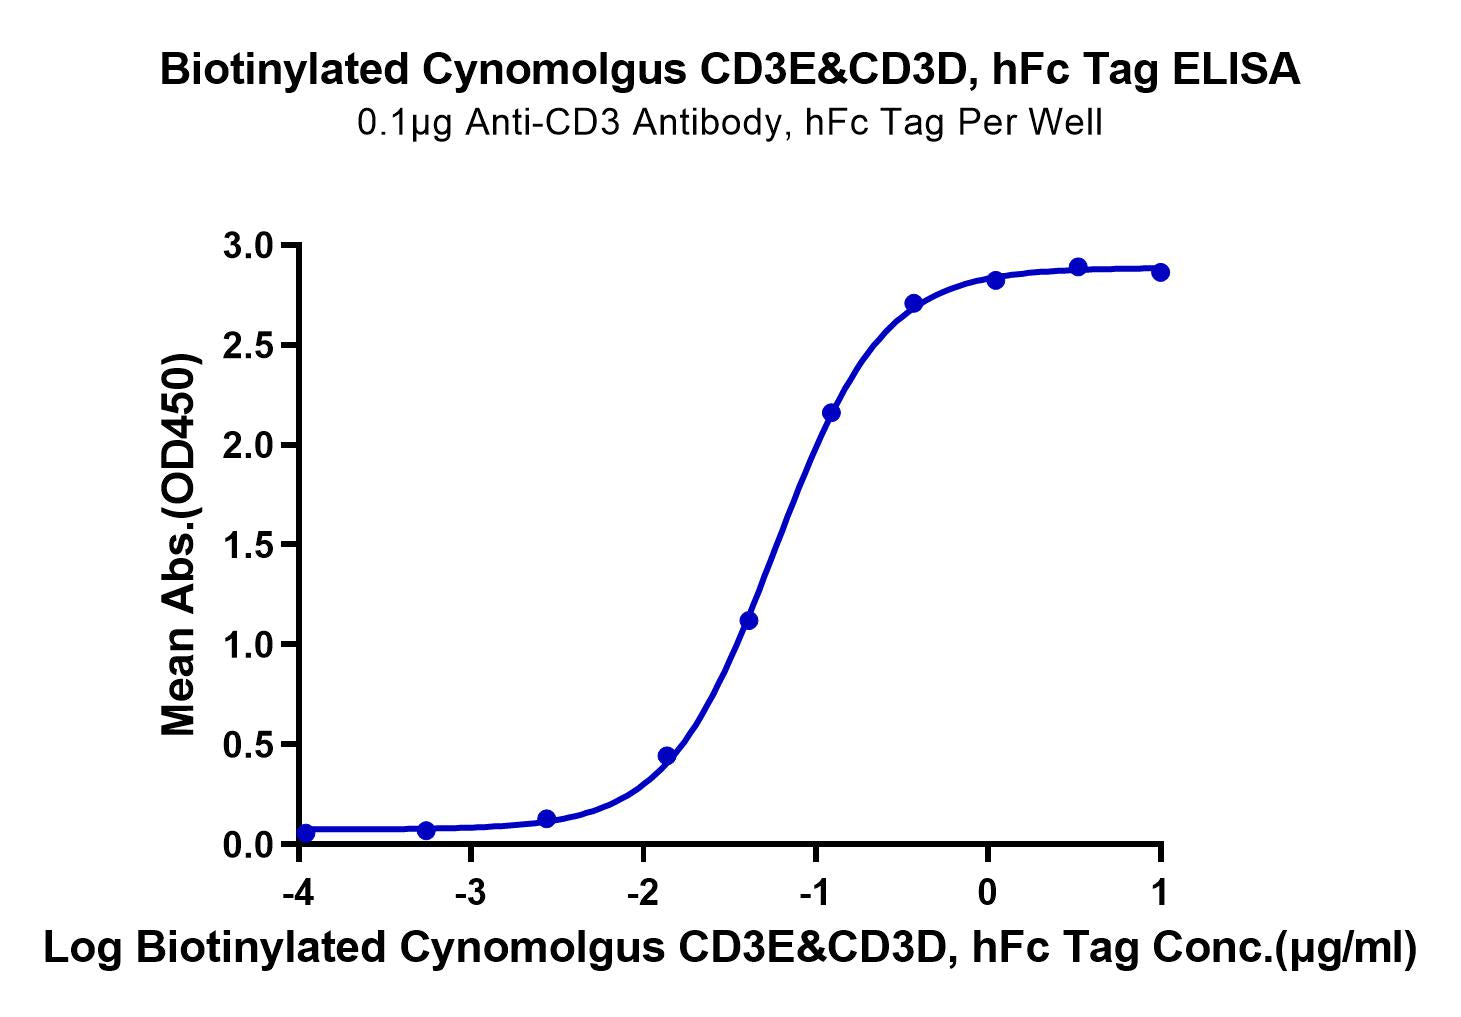 Biotinylated Cynomolgus CD3E&CD3D/CD3 epsilon&CD3 delta Protein (Primary Amine Labeling)  (CD3-CM201B)